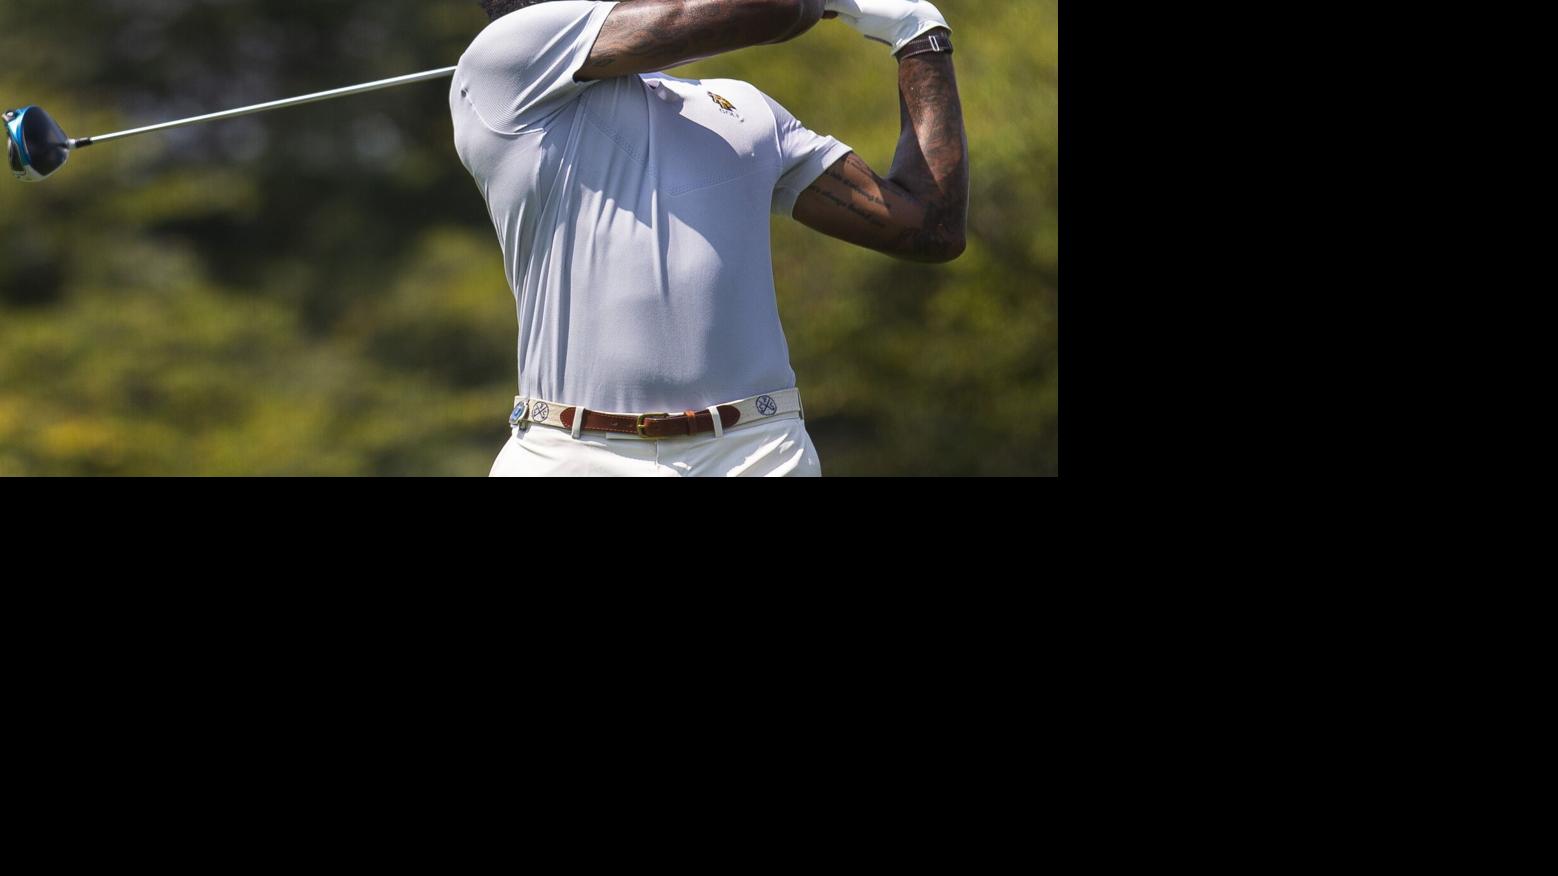 North Carolina A&T freshman golfer — and NBA champ — J.R. Smith makes his debut